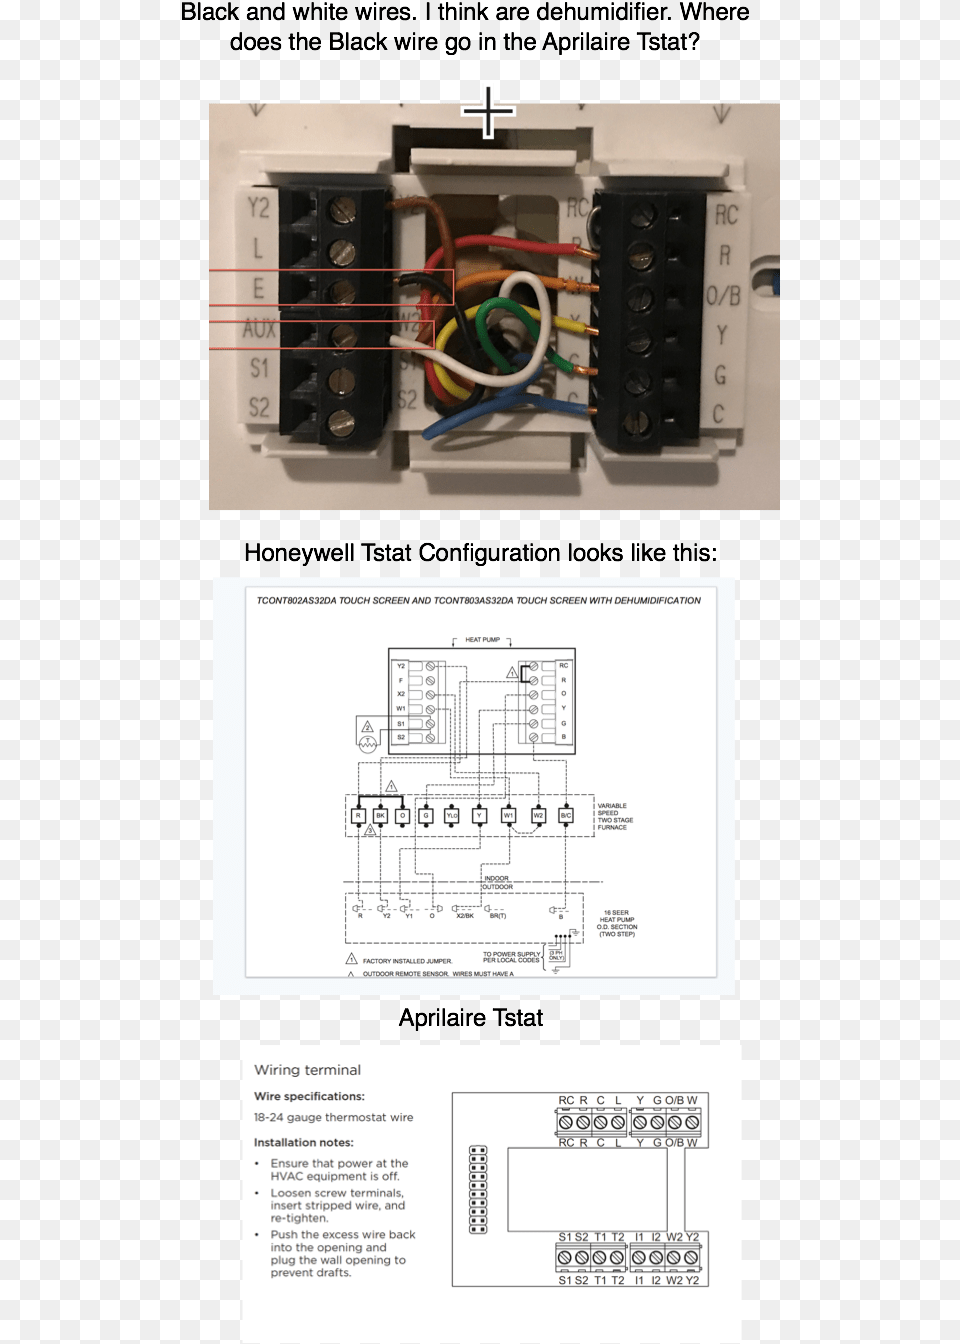 Electrical Wiring, Computer Hardware, Electronics, Hardware Png Image